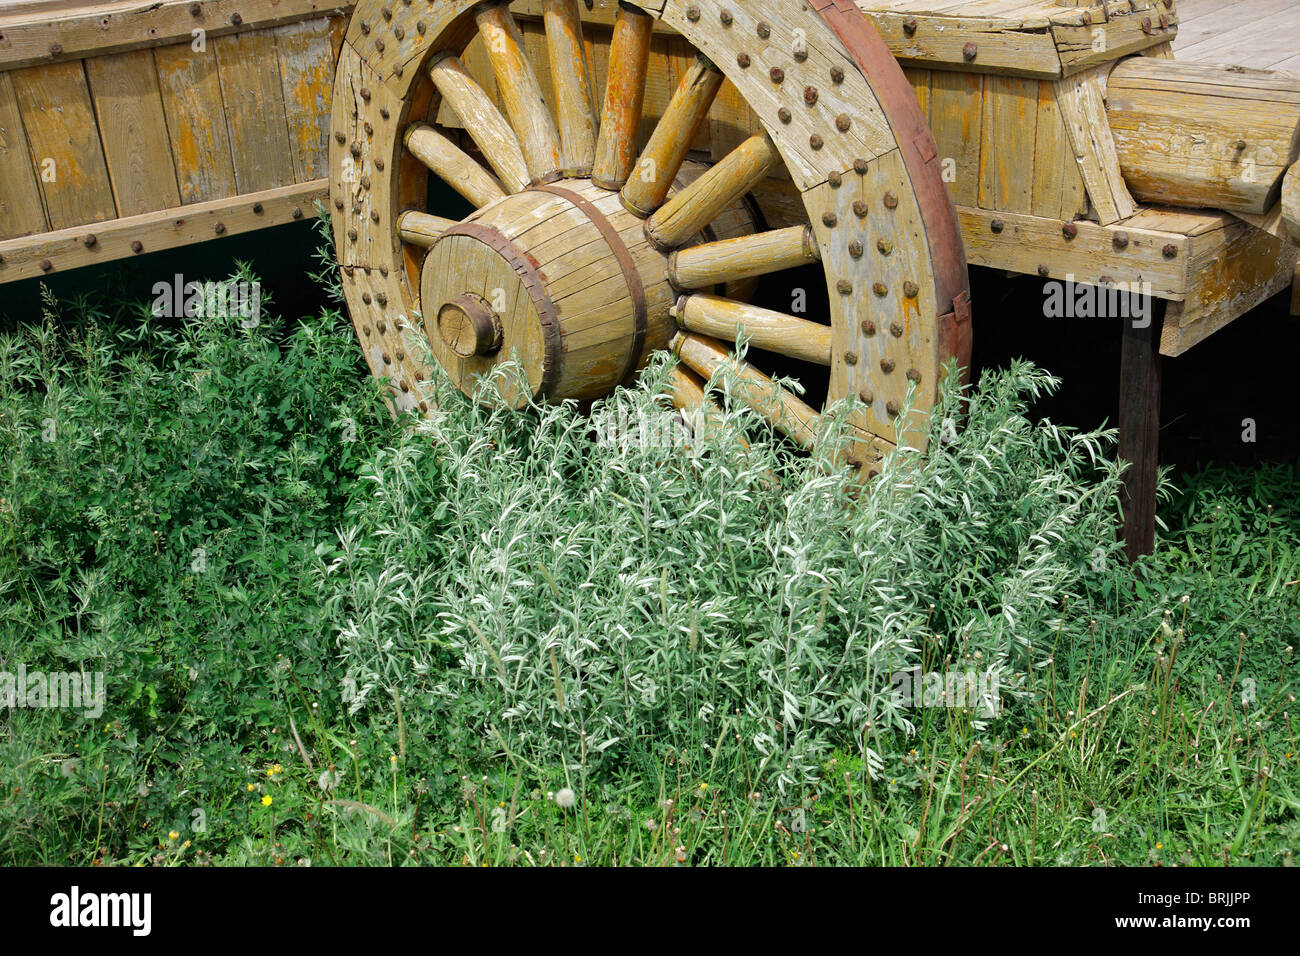 Decorative wooden wagon wheel overgrown by green vegetation Stock Photo